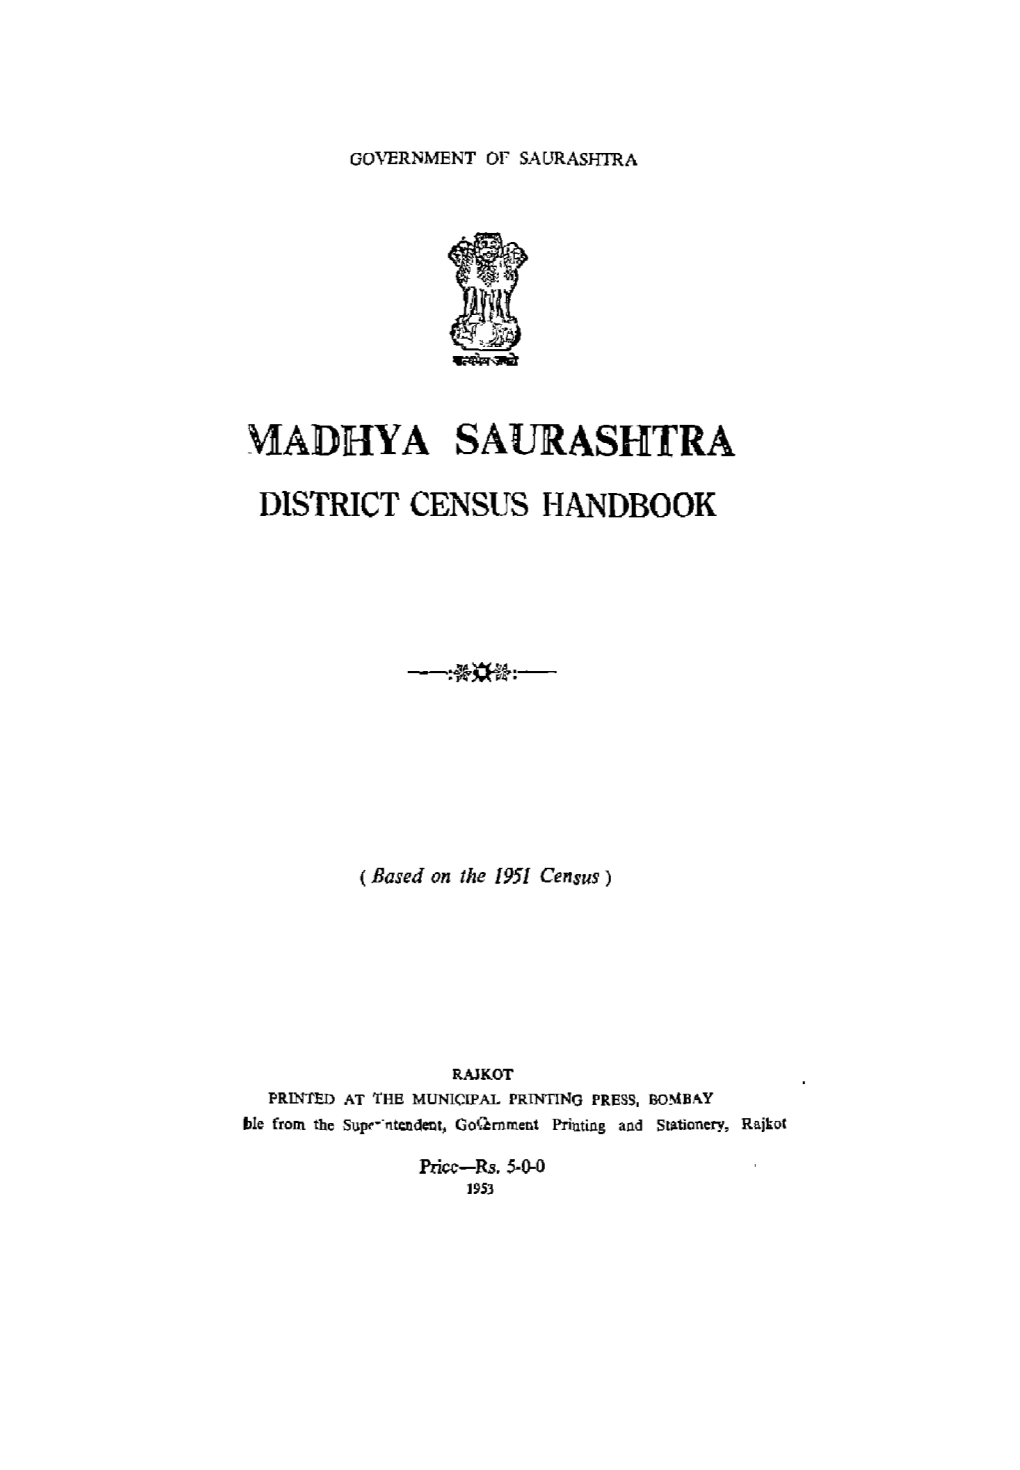 District Census Handbook, Madhya Saurashtra